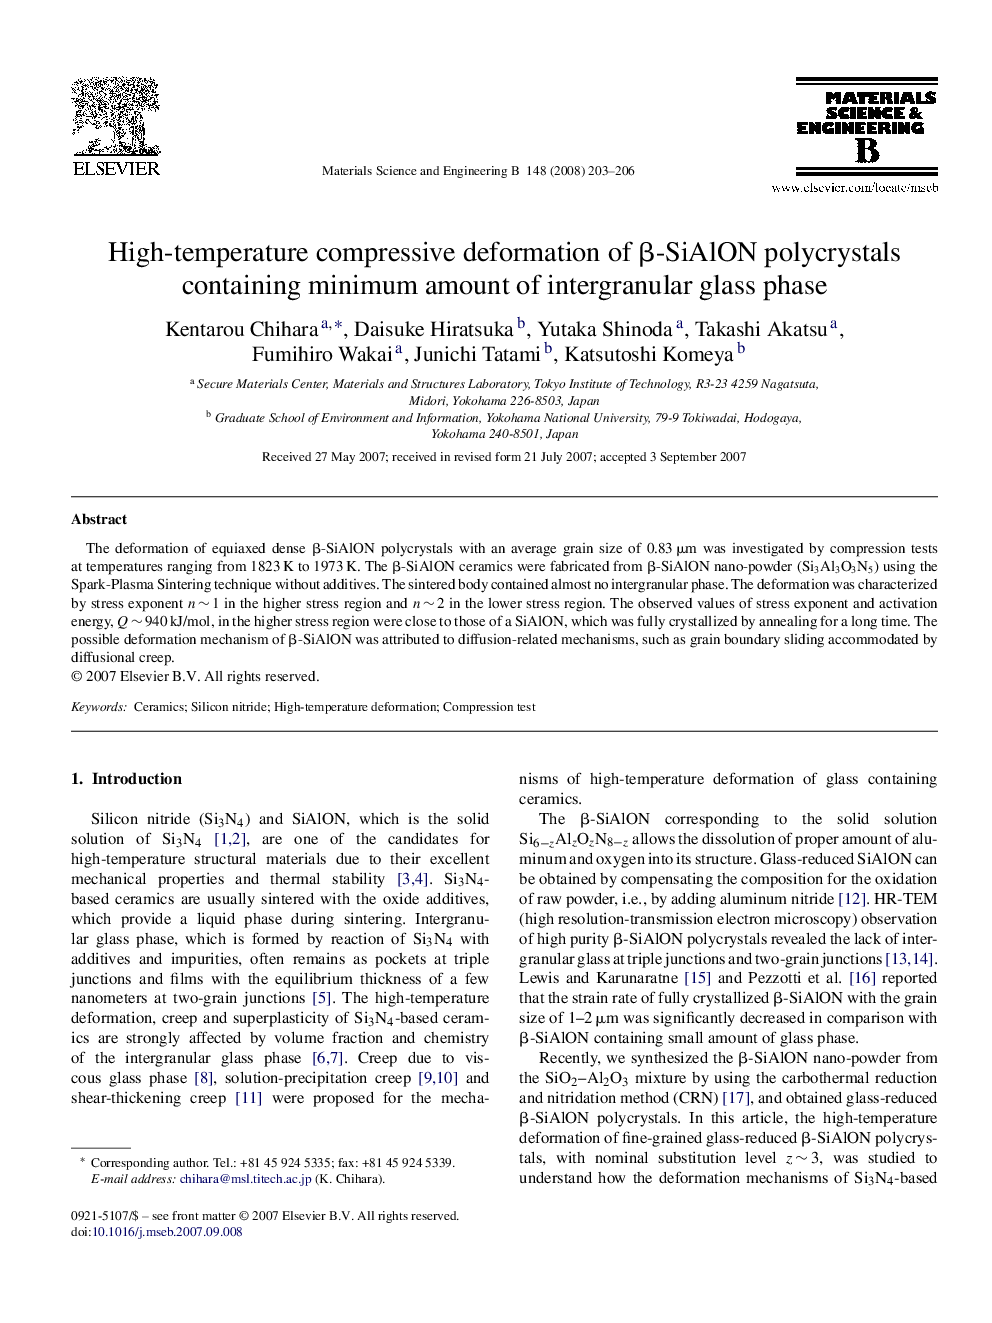 High-temperature compressive deformation of Î²-SiAlON polycrystals containing minimum amount of intergranular glass phase